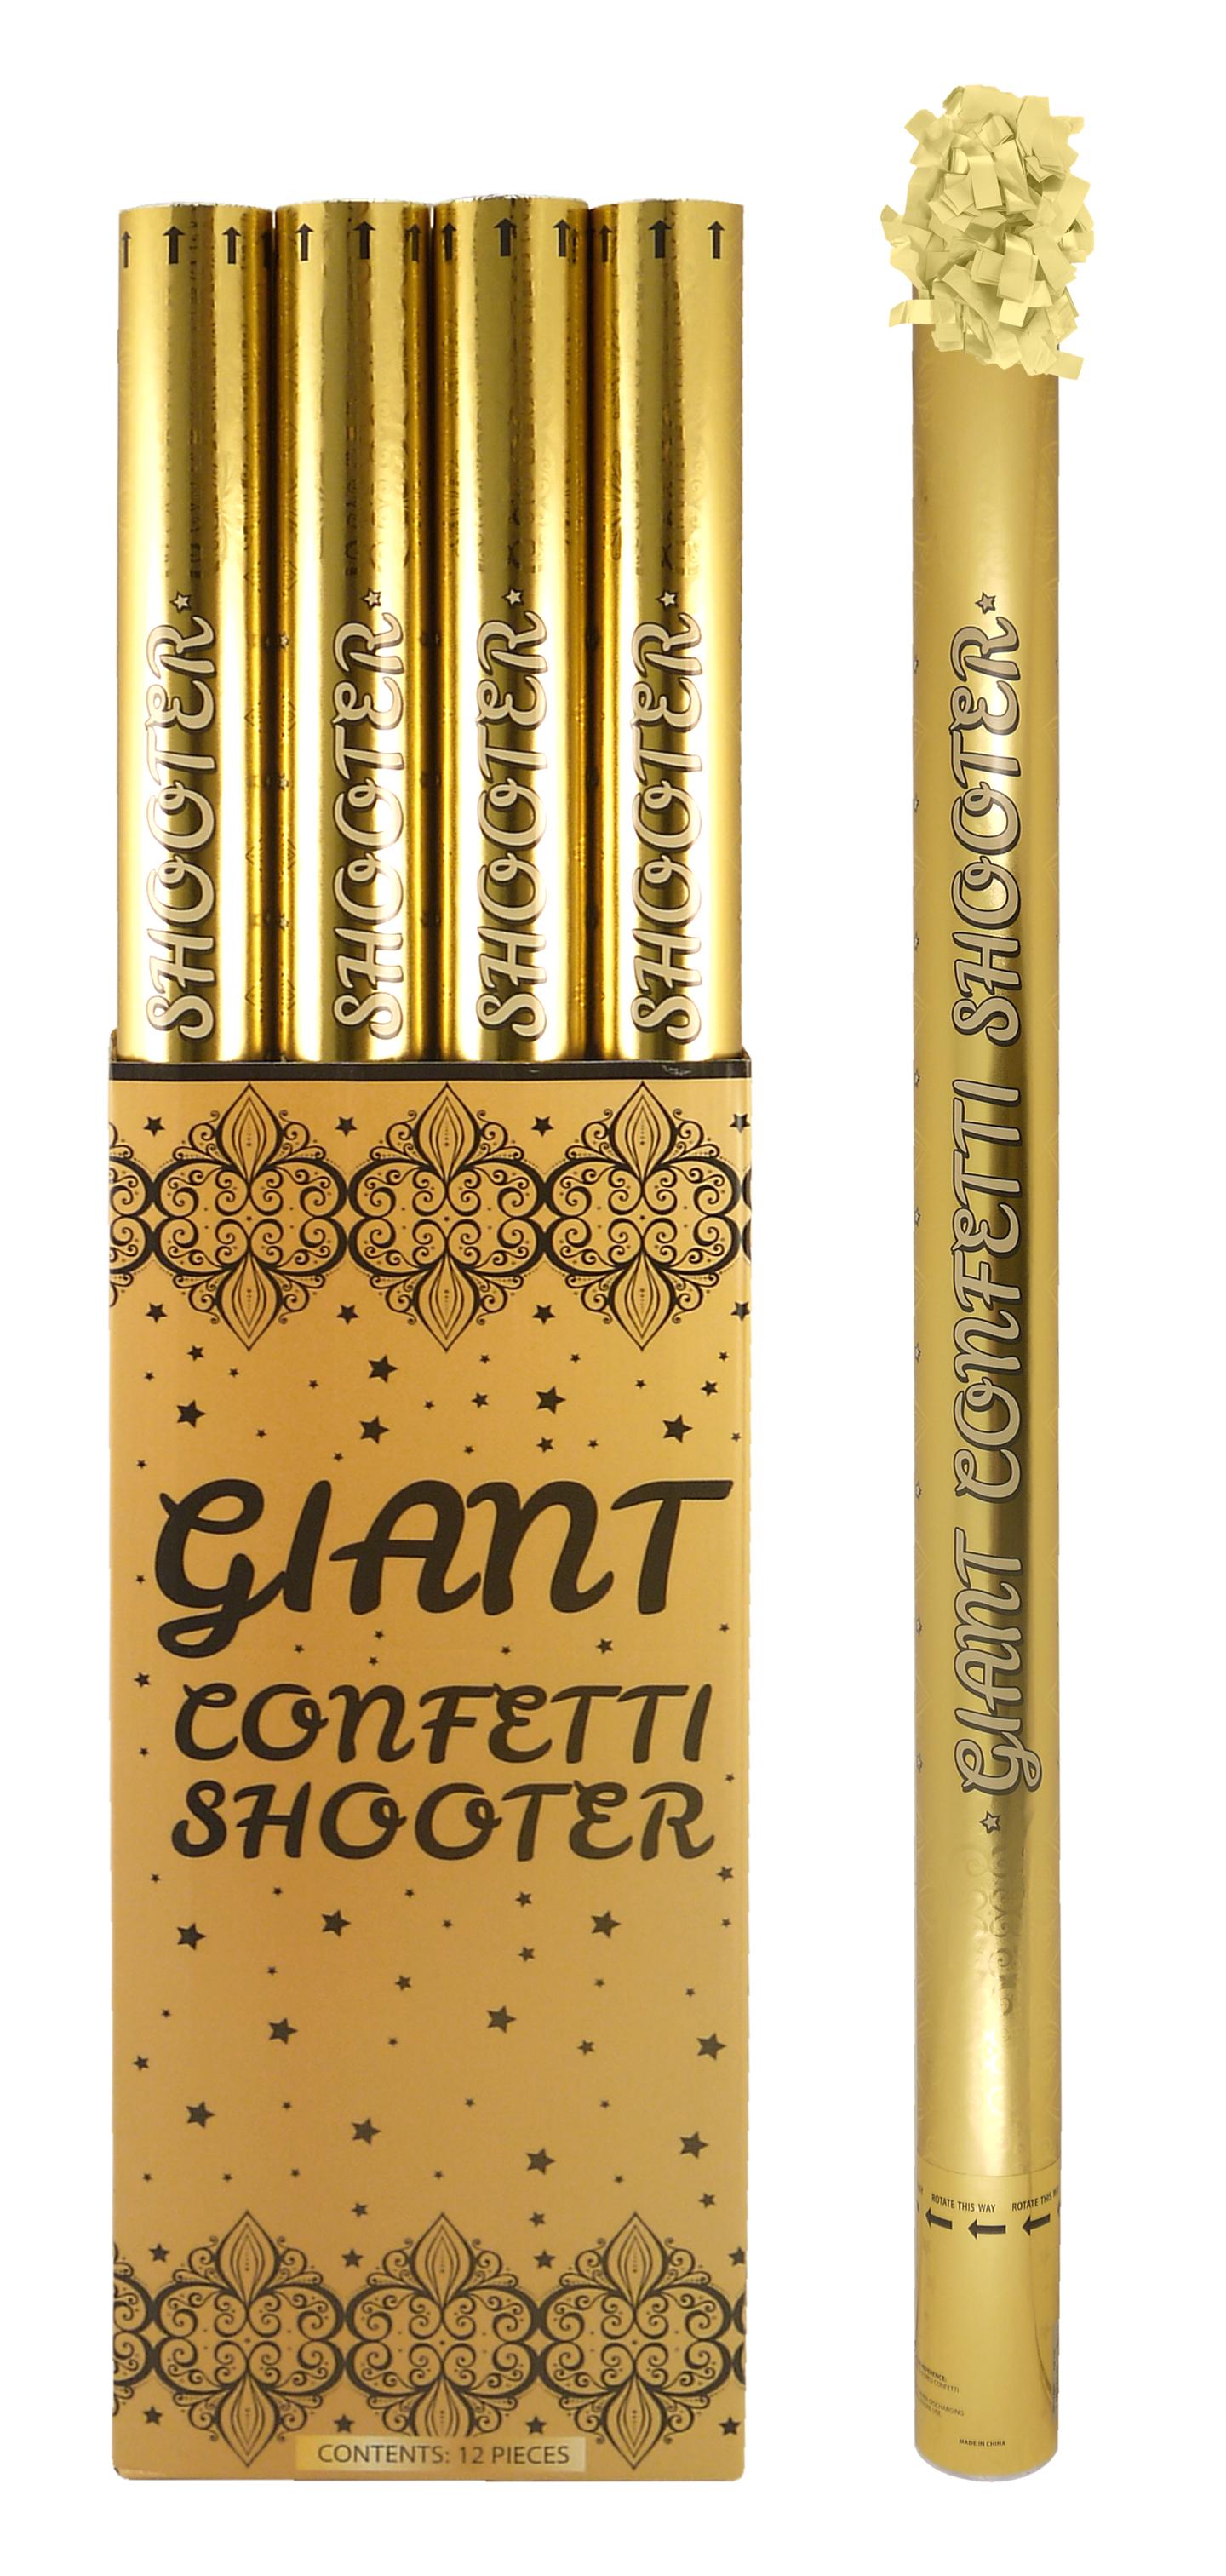 Confetti Cannon Shooter Gold Paper